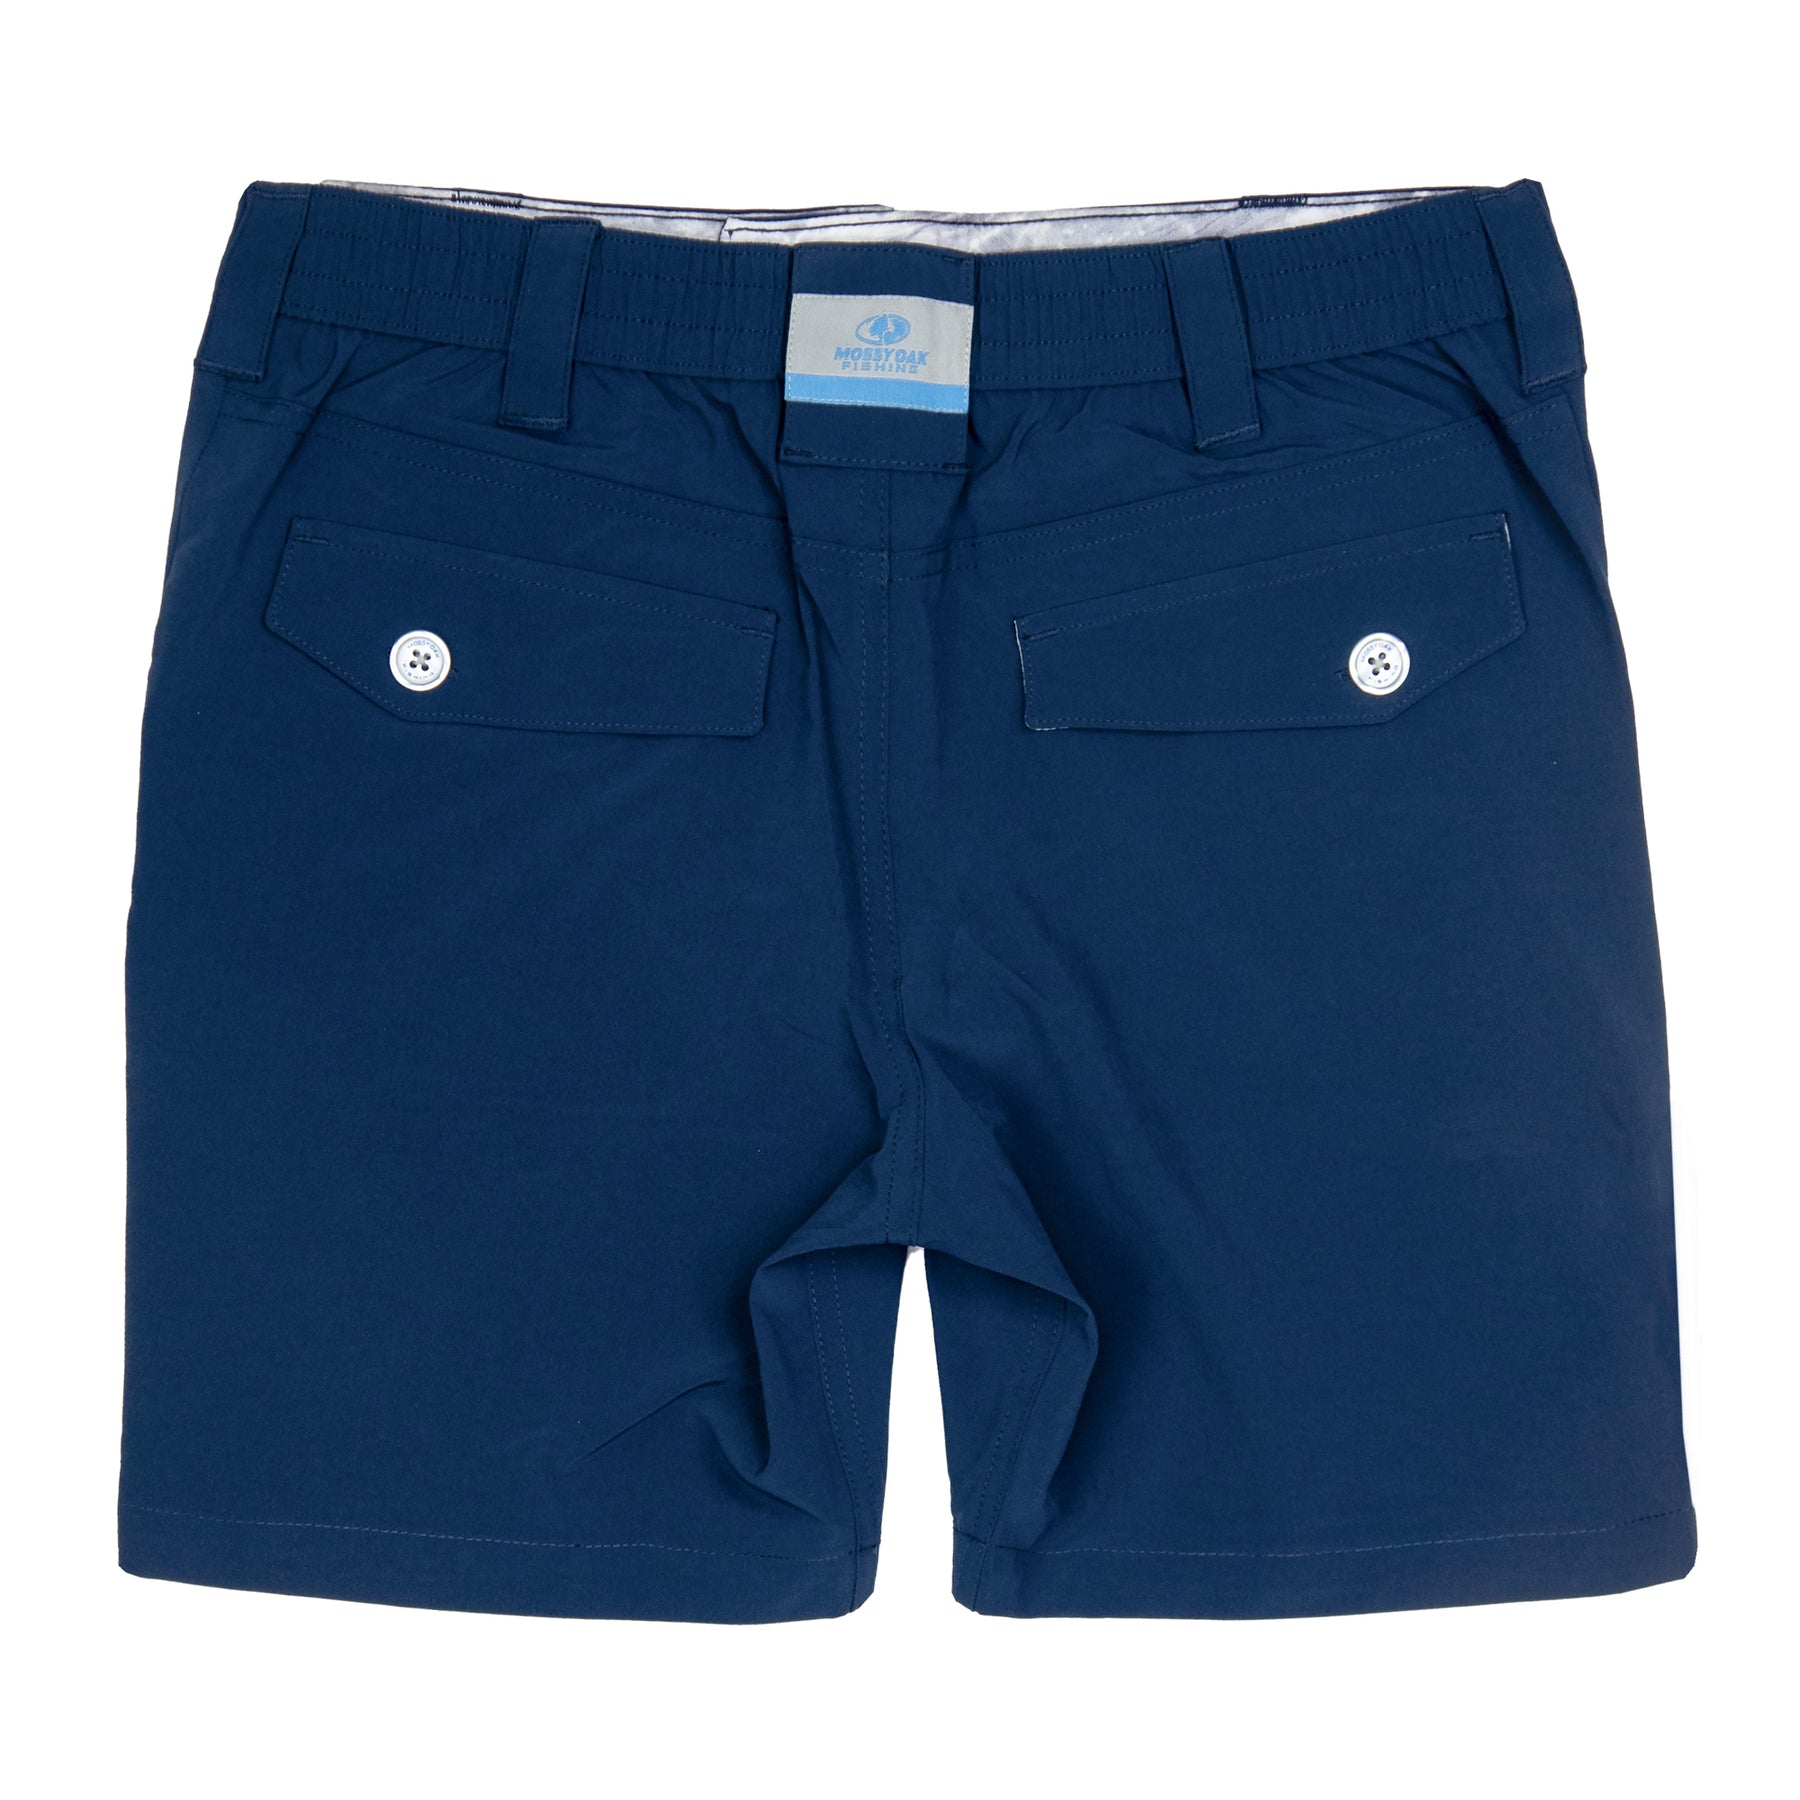 Mossy Oak Men's XTR Fishing Shorts, Charcoal, Small, Shorts